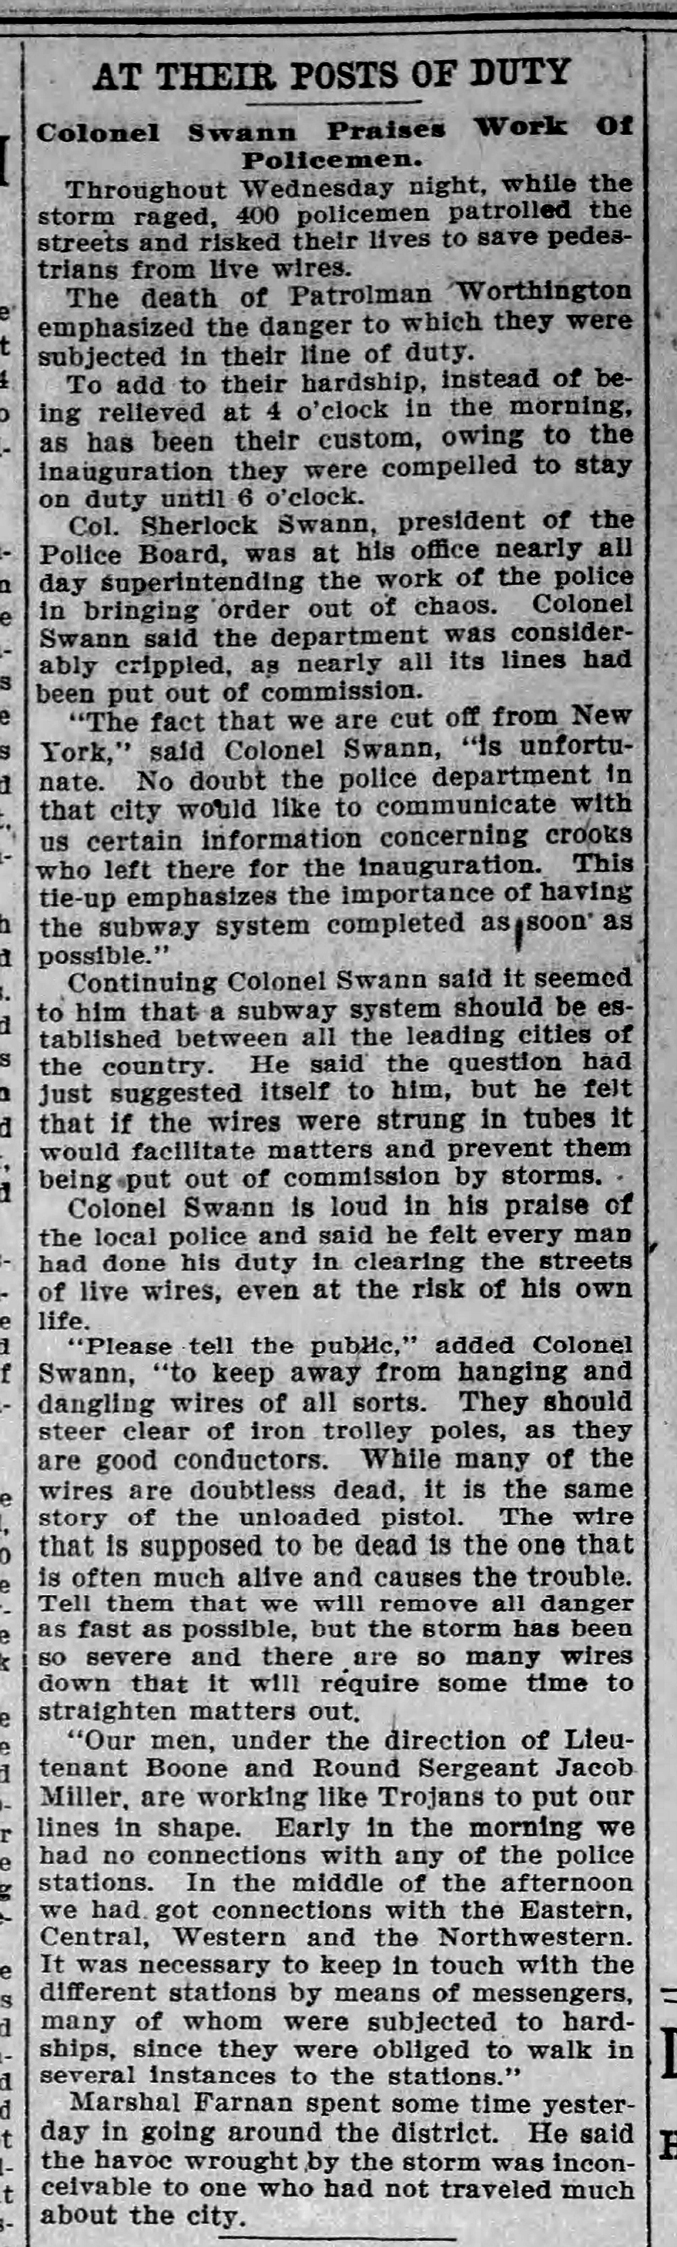 The Baltimore Sun Fri Mar 5 1909 pg2 72